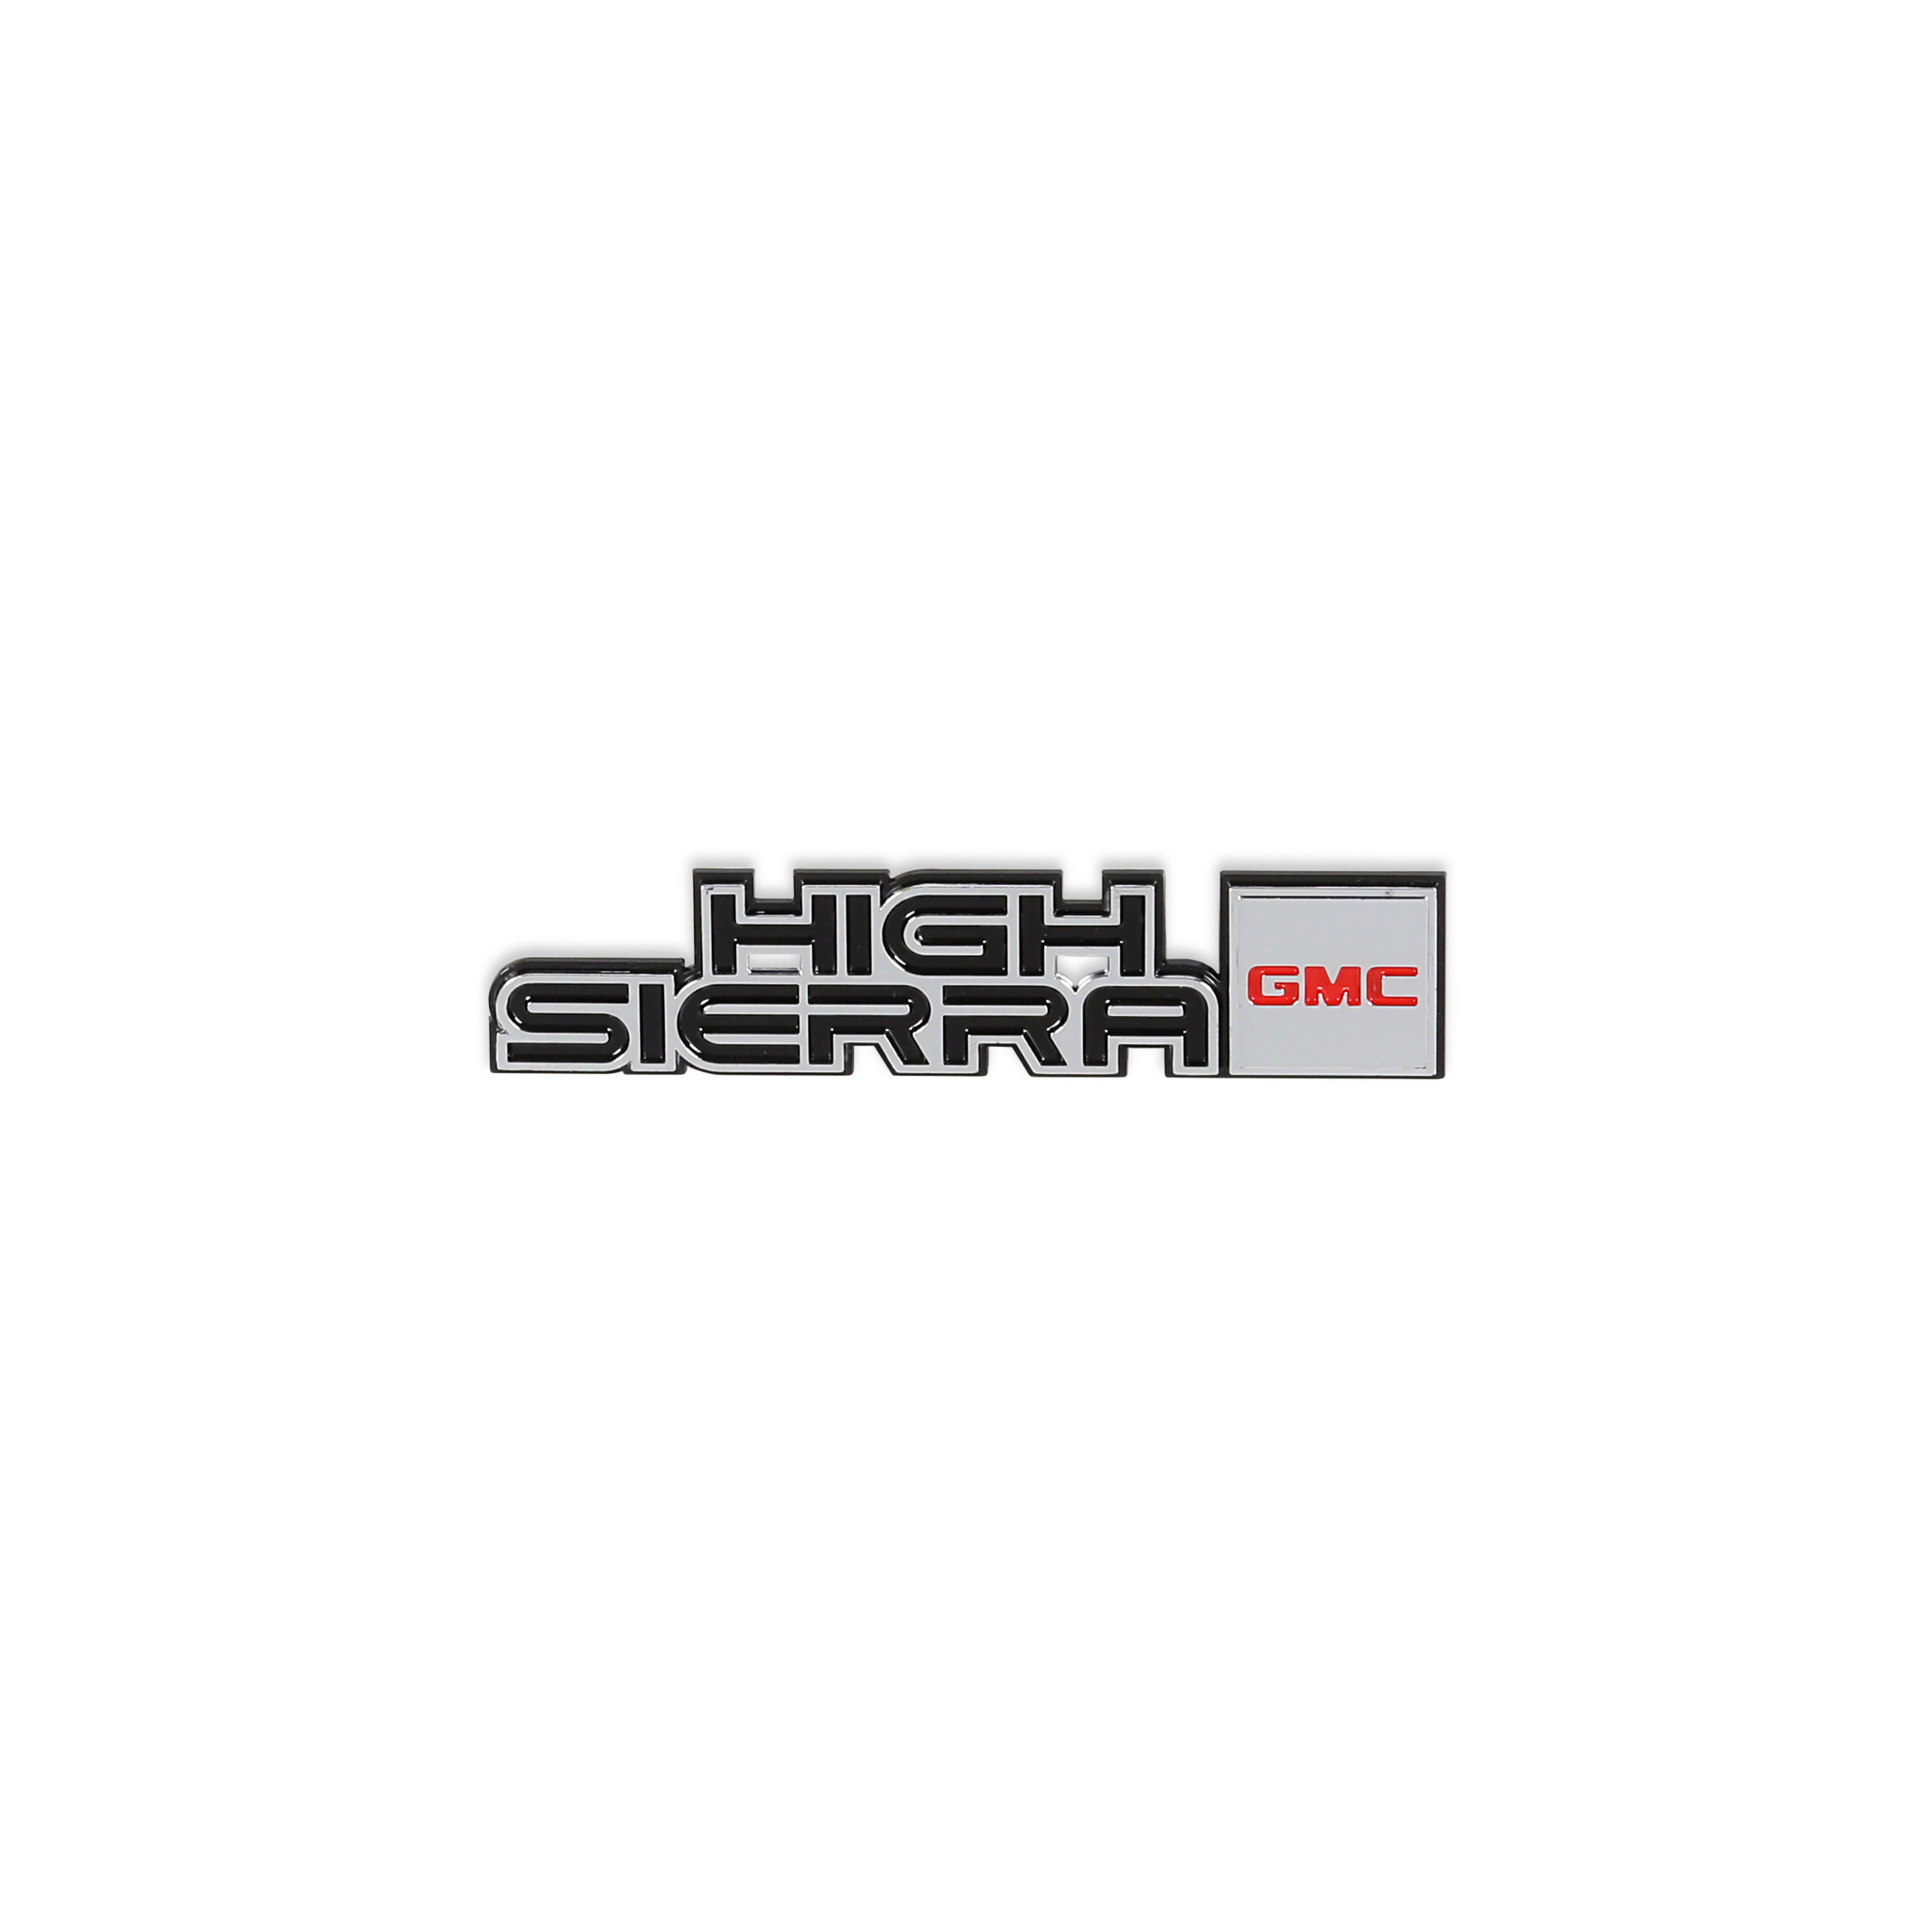 BROTHERS C/K Dash Emblem - GMC High Sierra pn 05-191